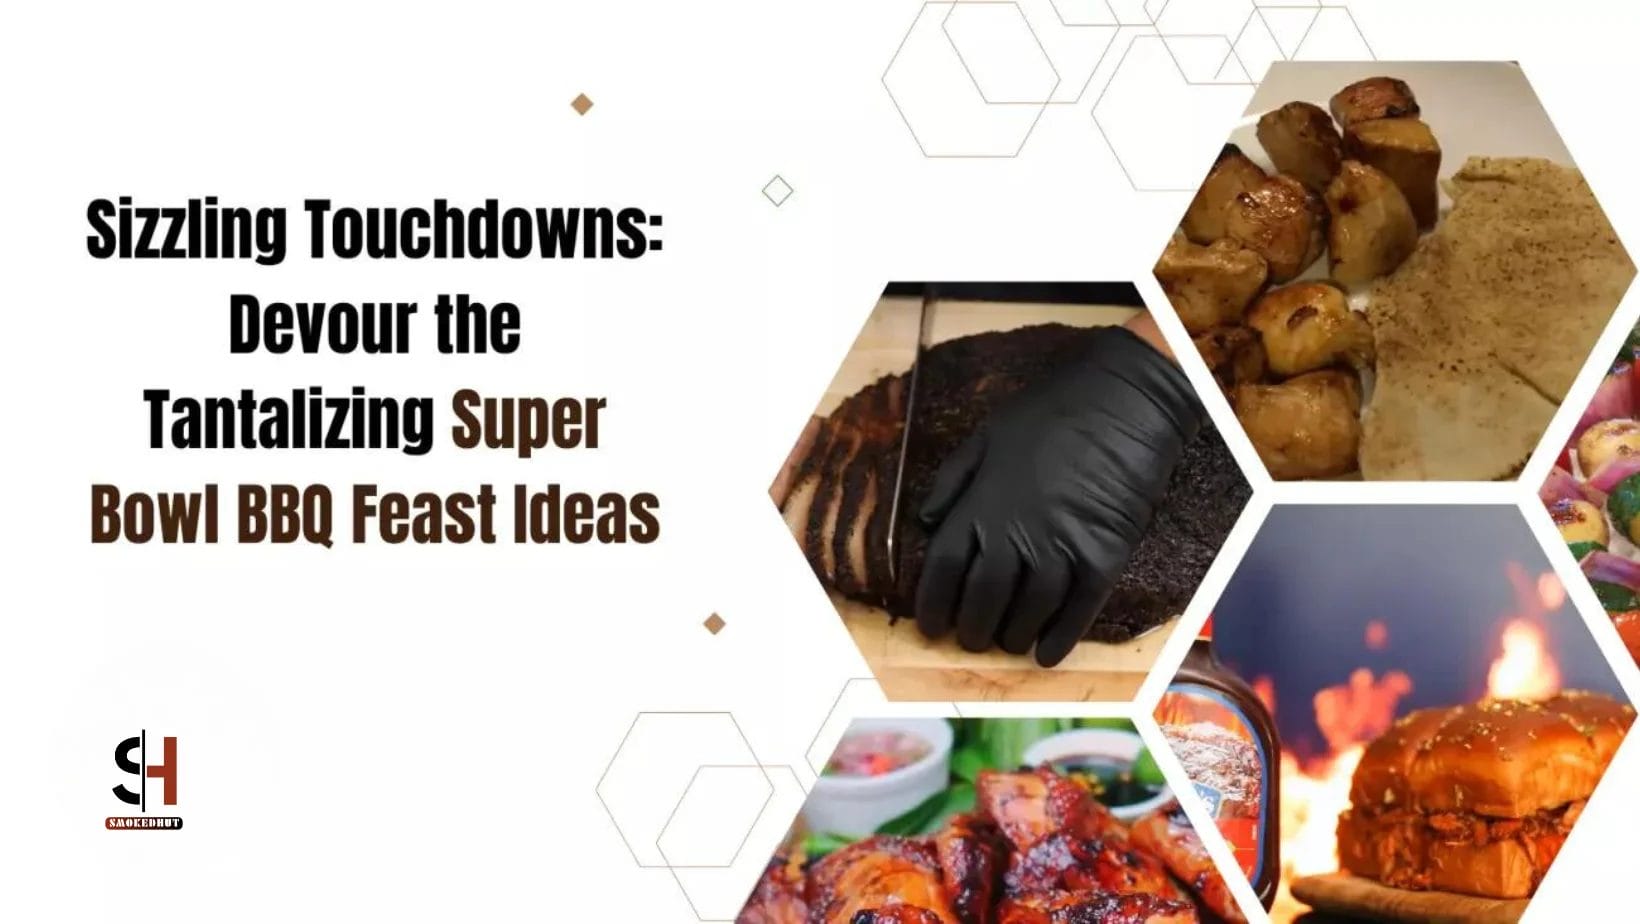 Sizzling Touchdowns Devour the Tantalizing Super Bowl BBQ Feast Ideas